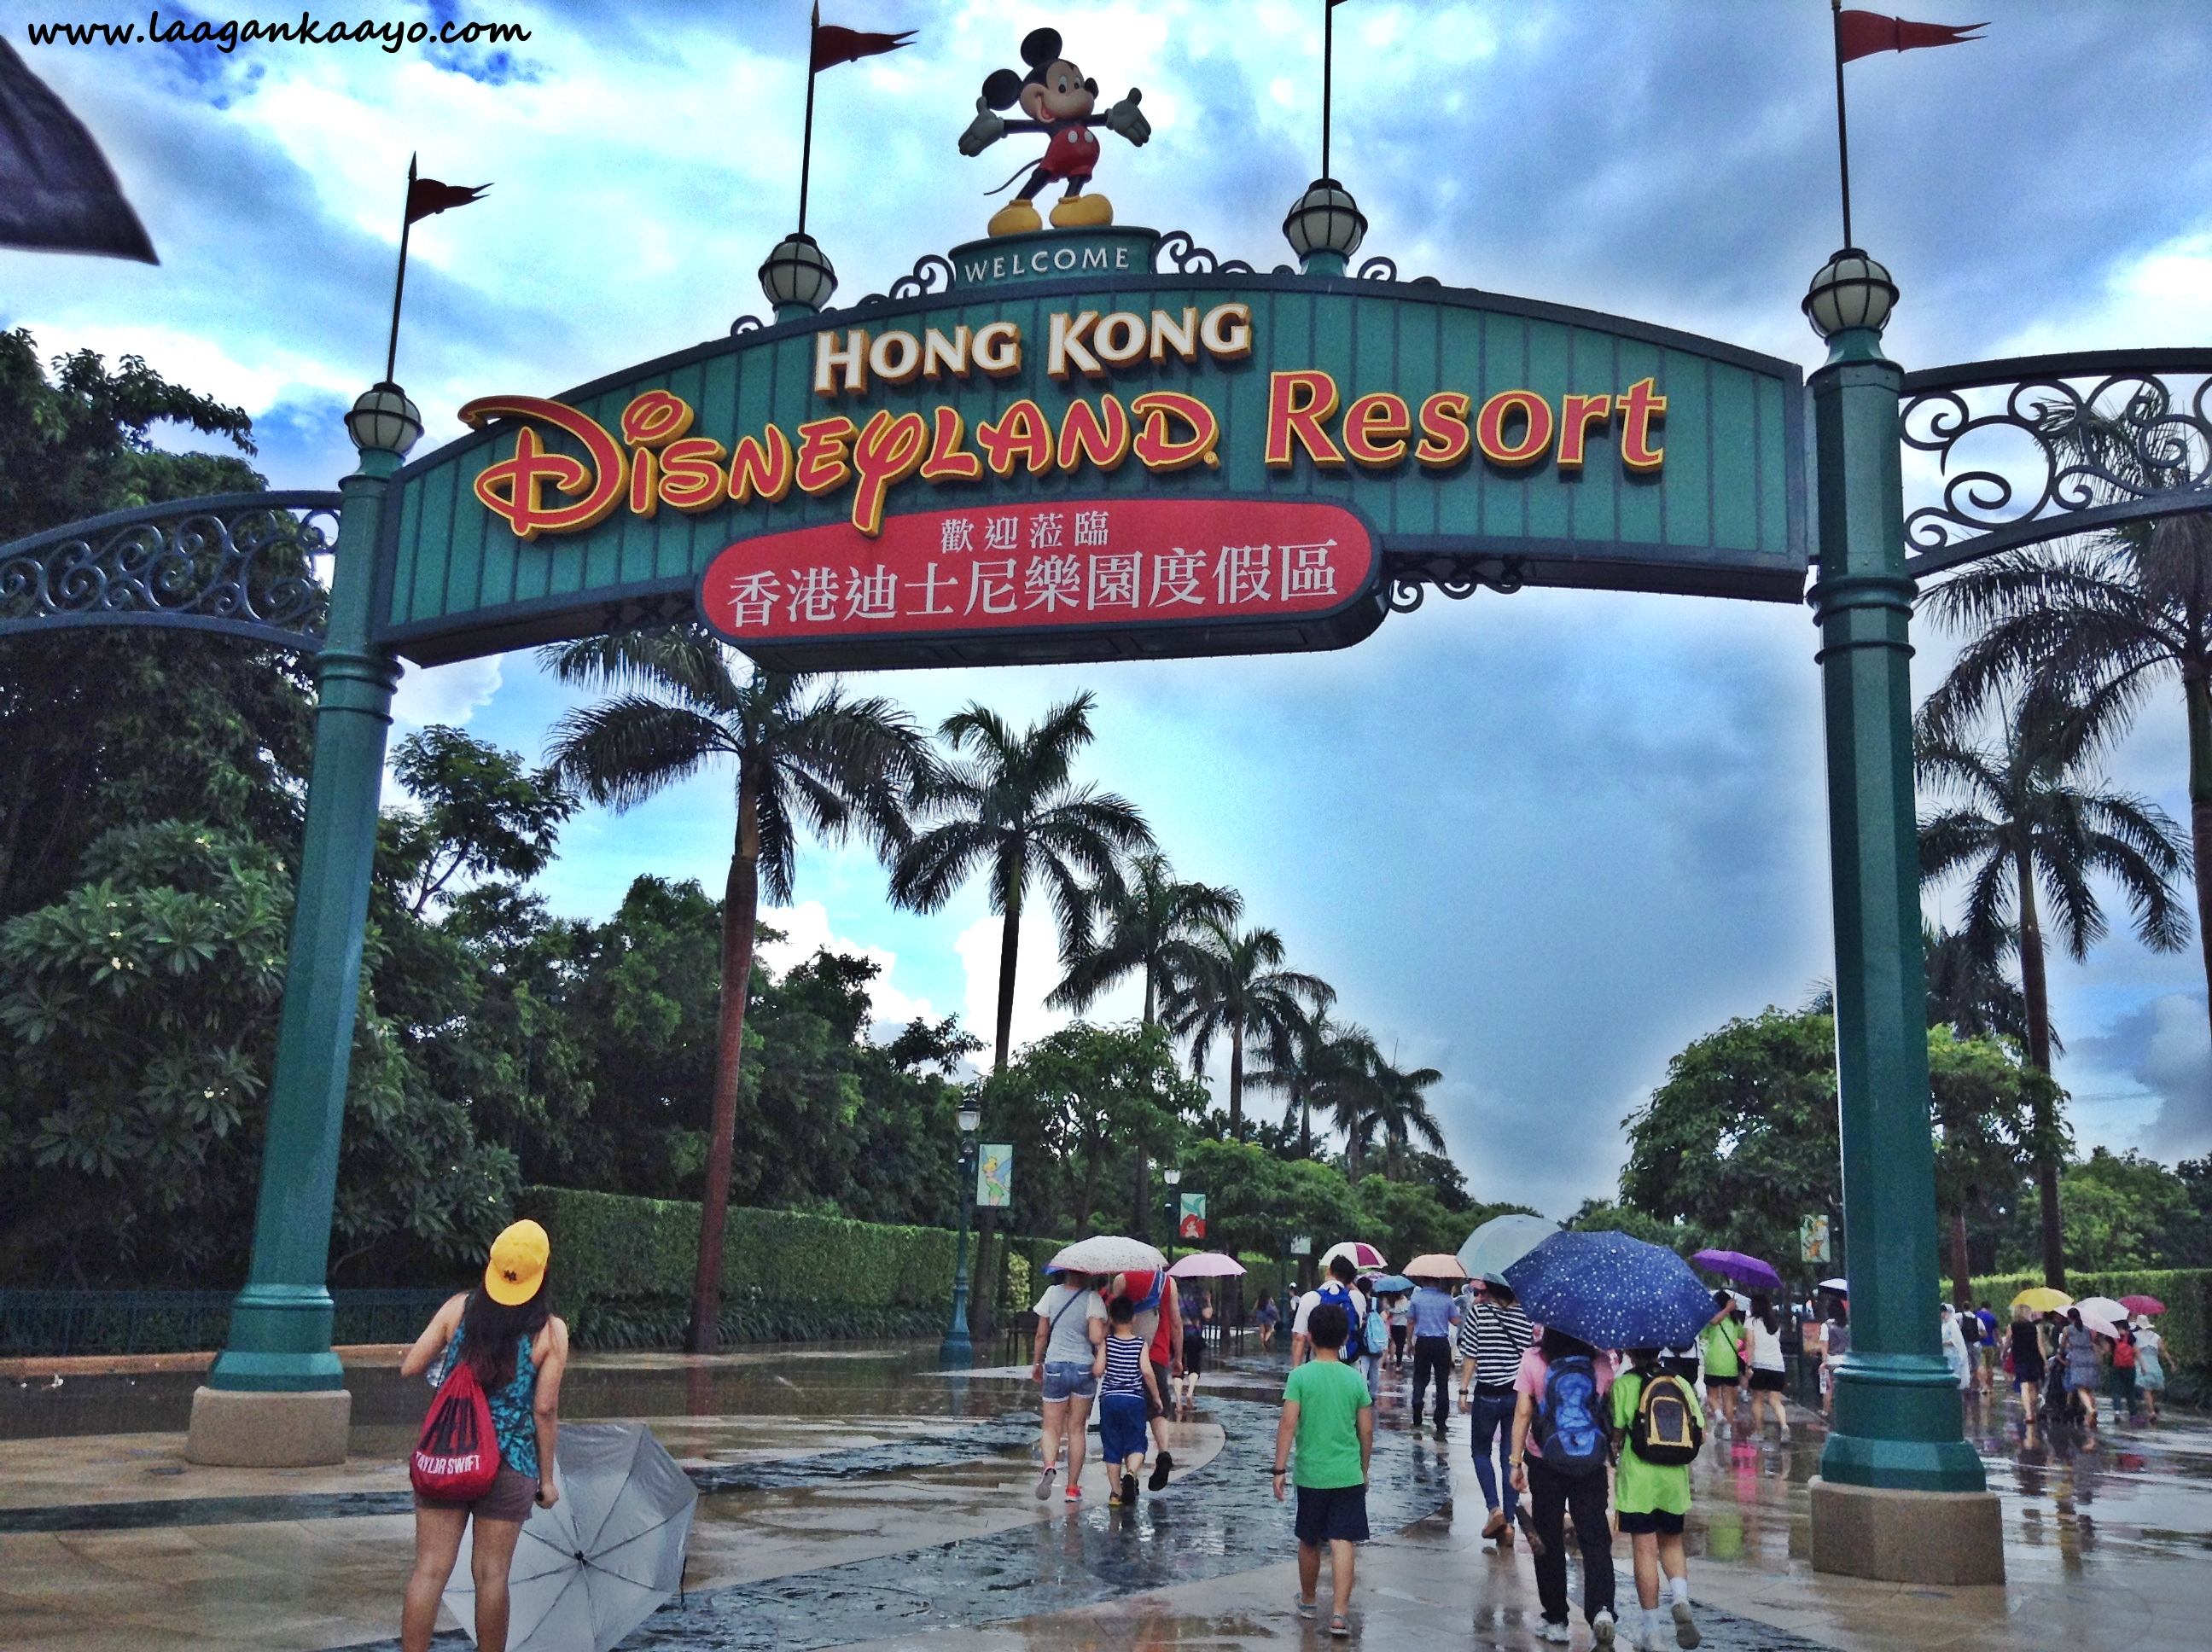 Welcome to Hong Kong Disneyland!